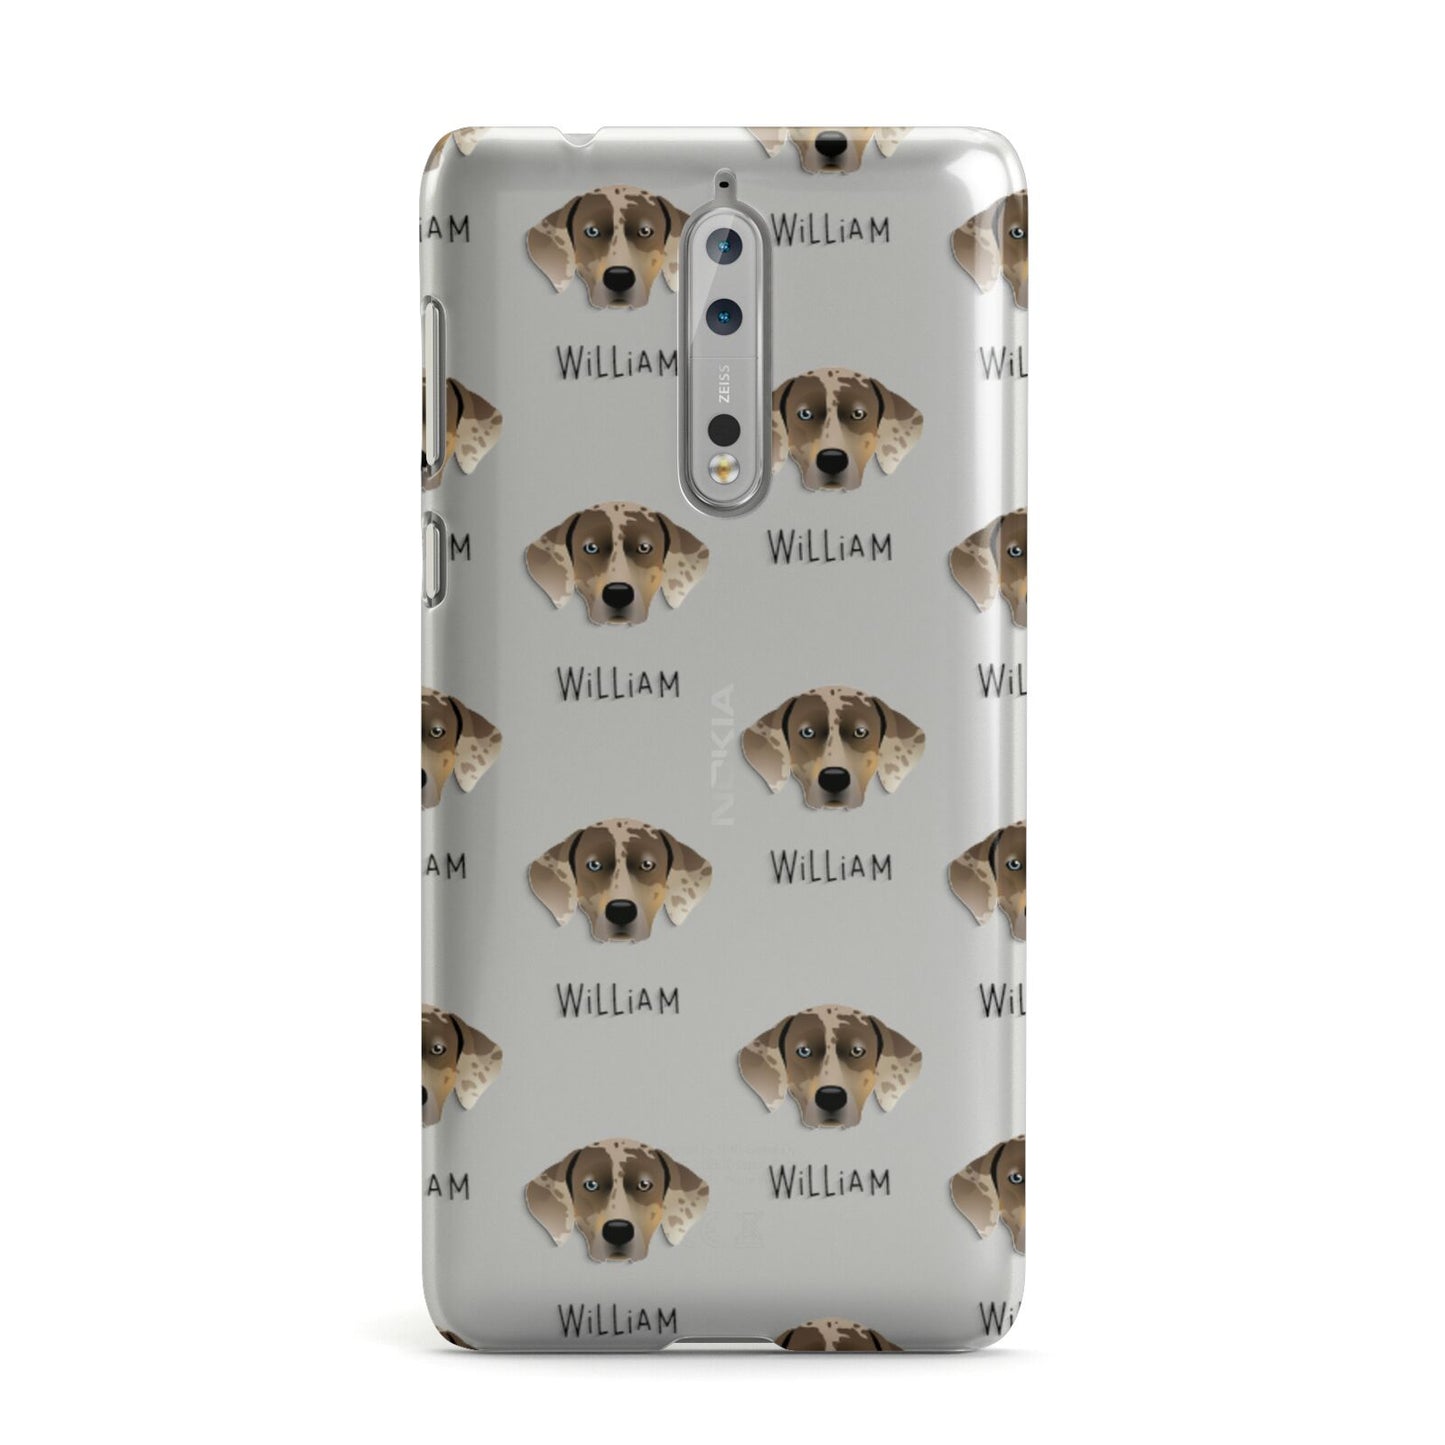 Catahoula Leopard Dog Icon with Name Nokia Case